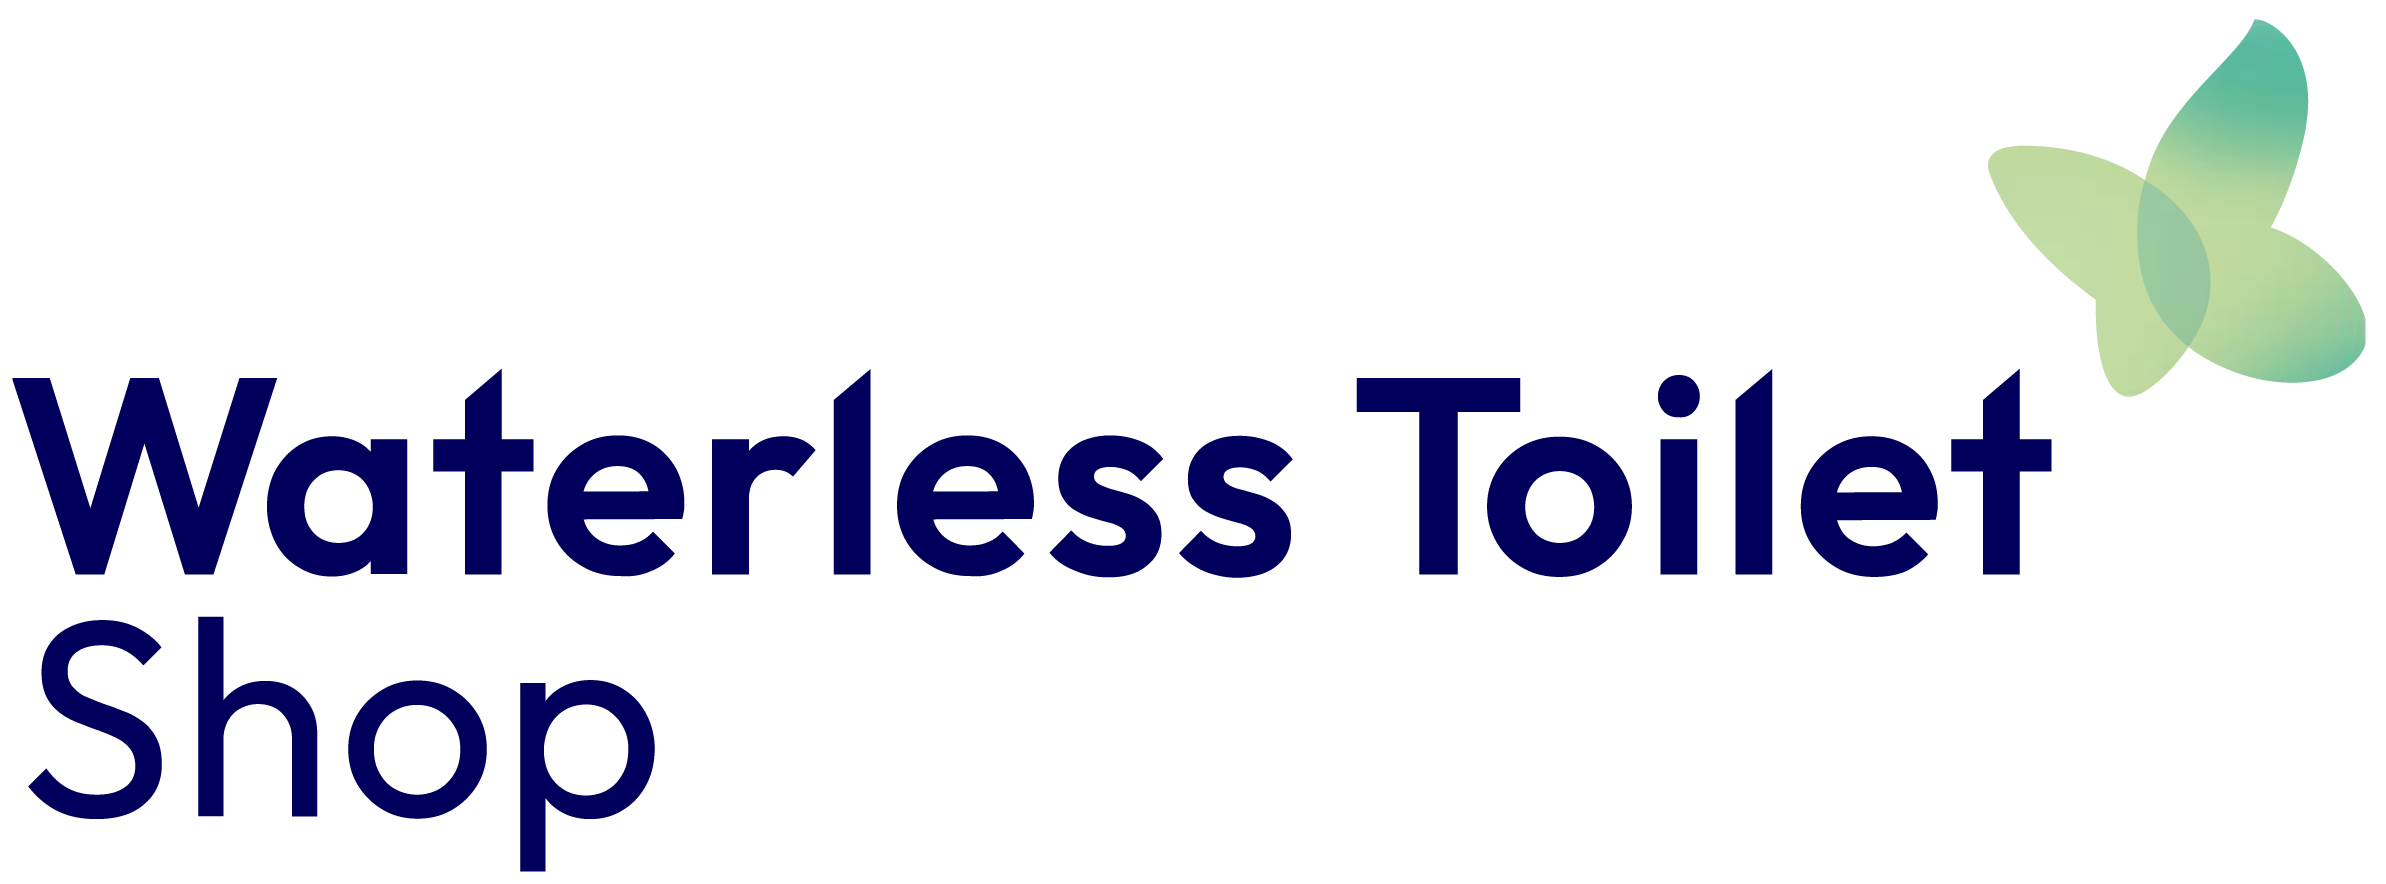 Waterless toilet shop logo